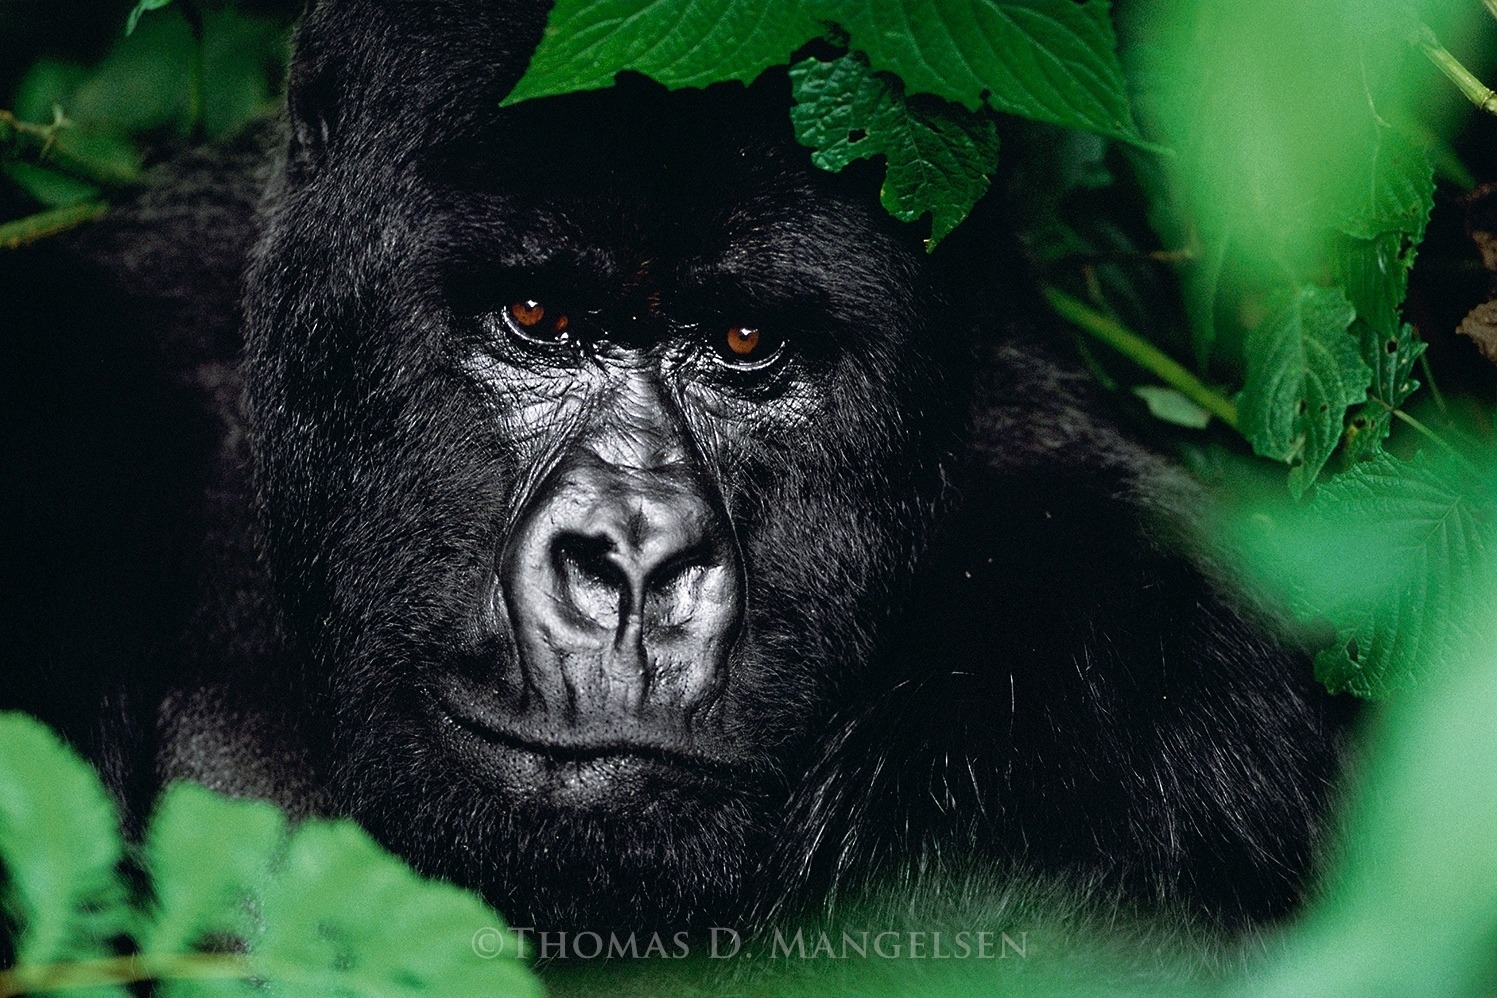 "In Gentle Giant," a mountain gorilla hides among the underbrush in the Virunga Mountains of Rwanda.  Photograph courtesy Thomas D. Mangelsen